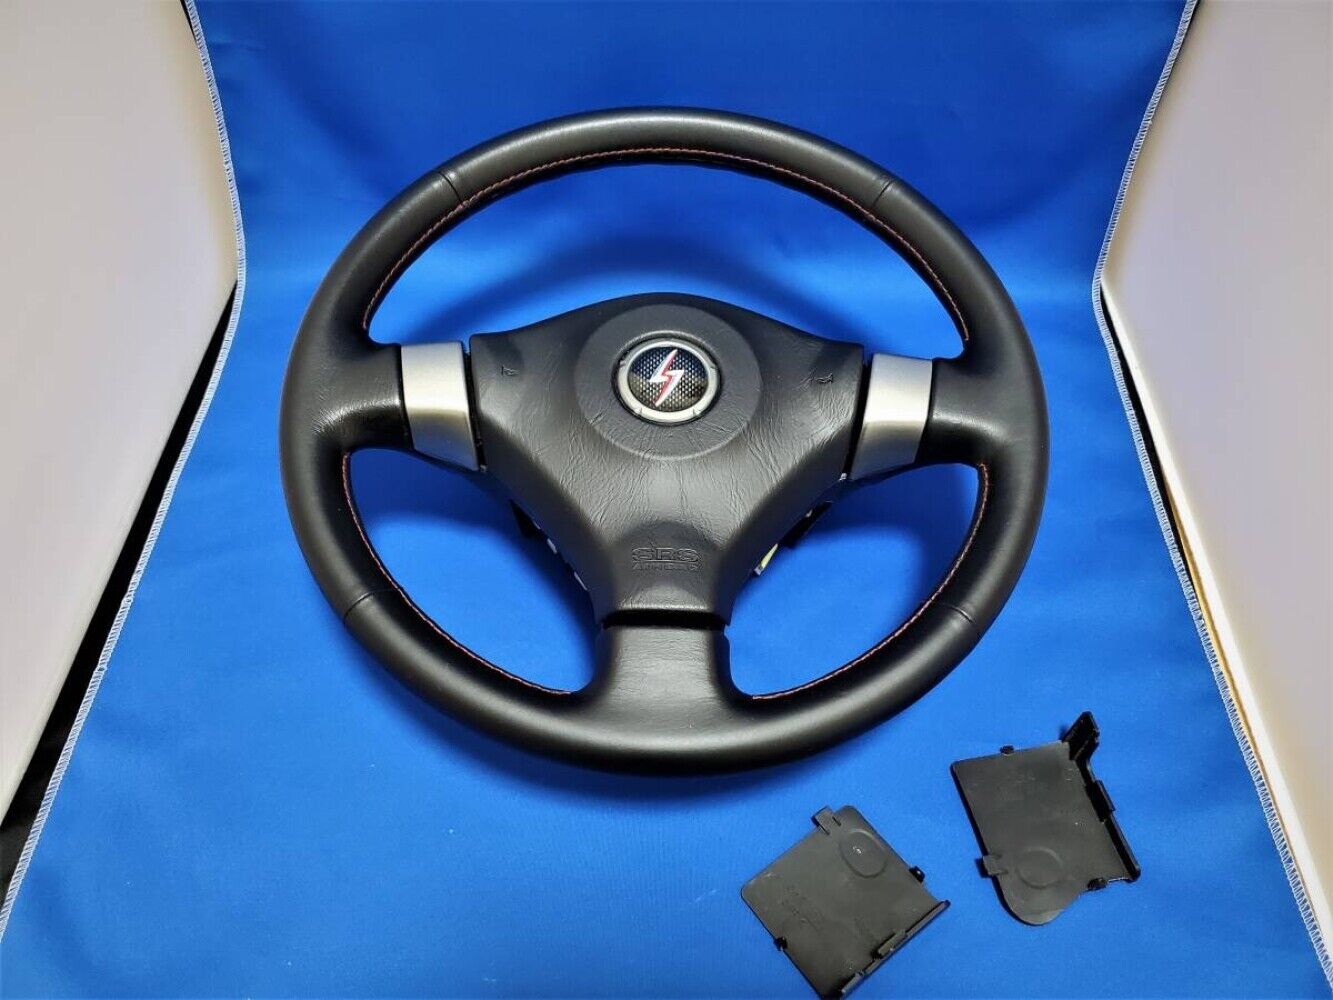 Nissan GENUINE Silvia S15 Leather Steering Wheel Spec R Red Stitch SR20DET